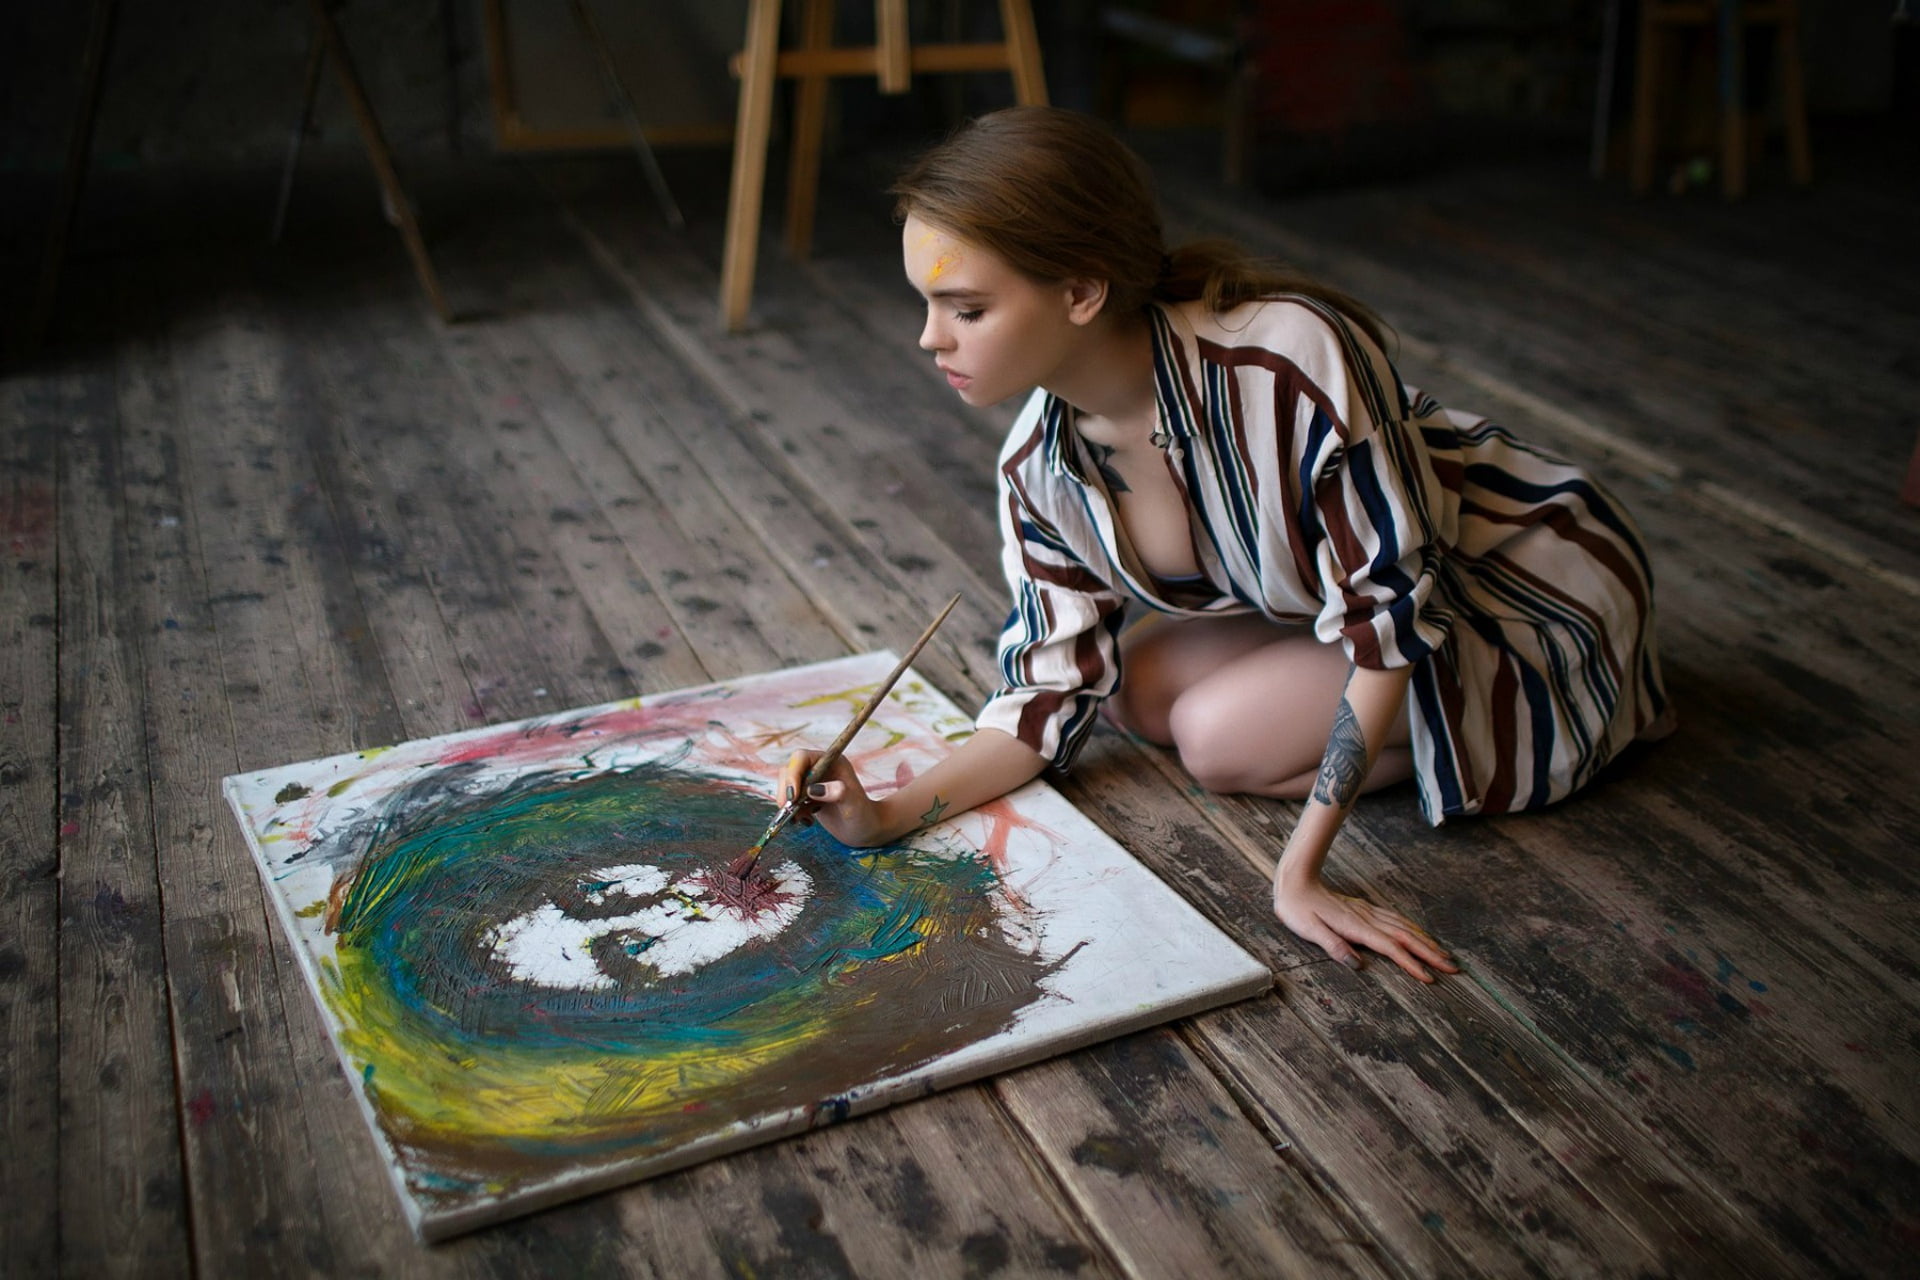 paint, creativity, brush, Anastasia Shcheglova, one person